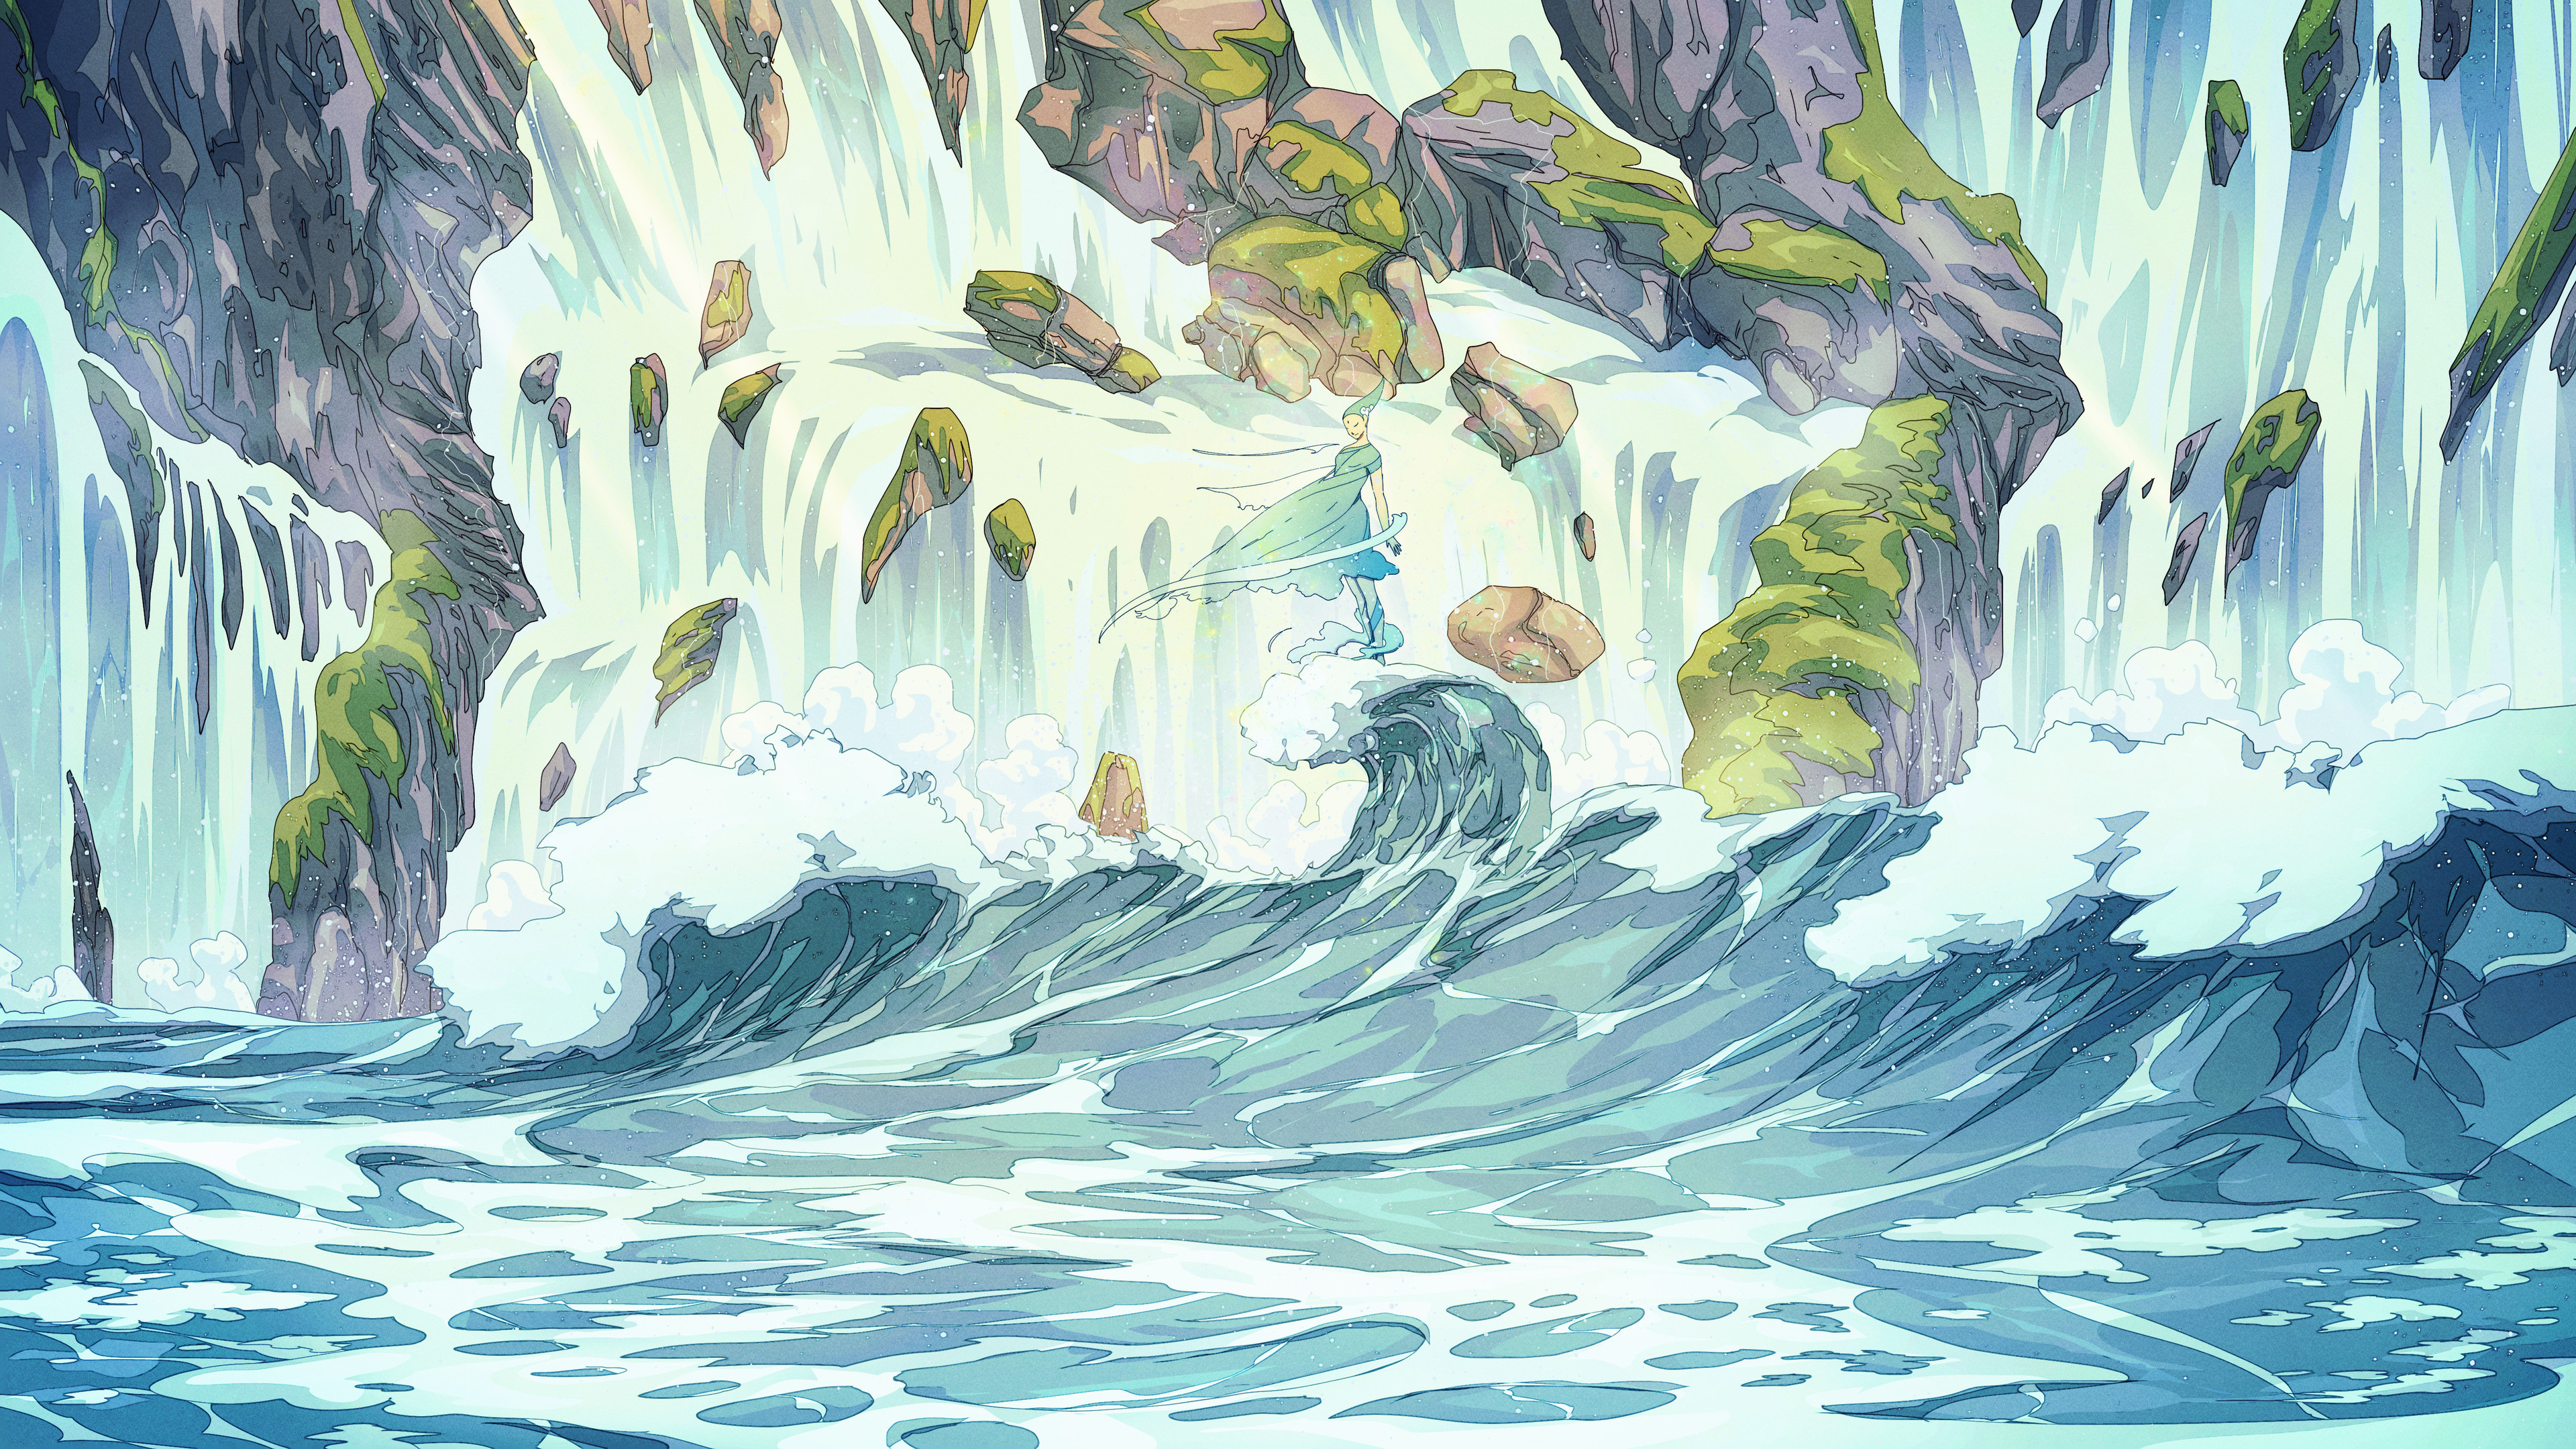 Christian Benavides Digital Art Fantasy Art Waterfall Water Nature Artwork 3840x2160